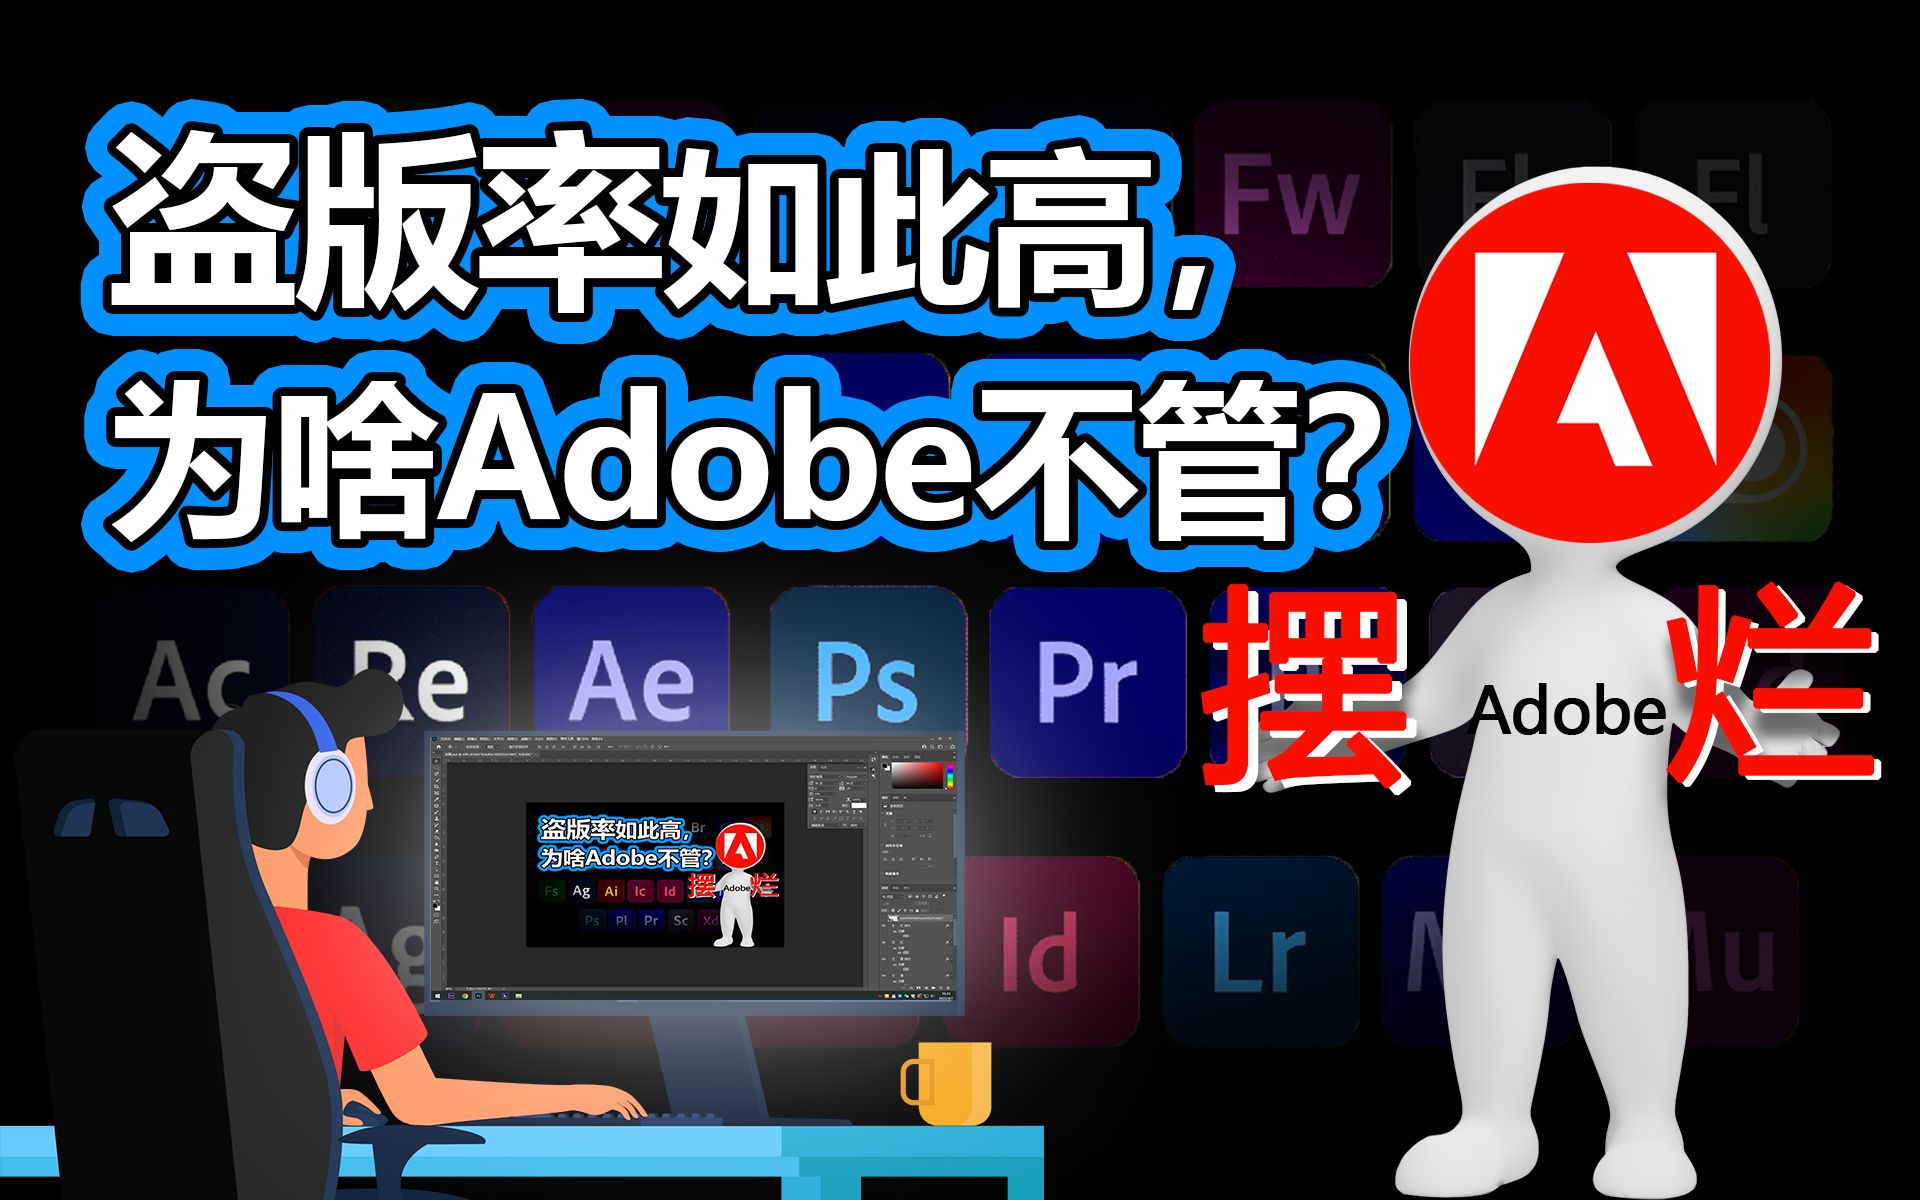 Adobe和盗版用户，到底谁才是大冤种？